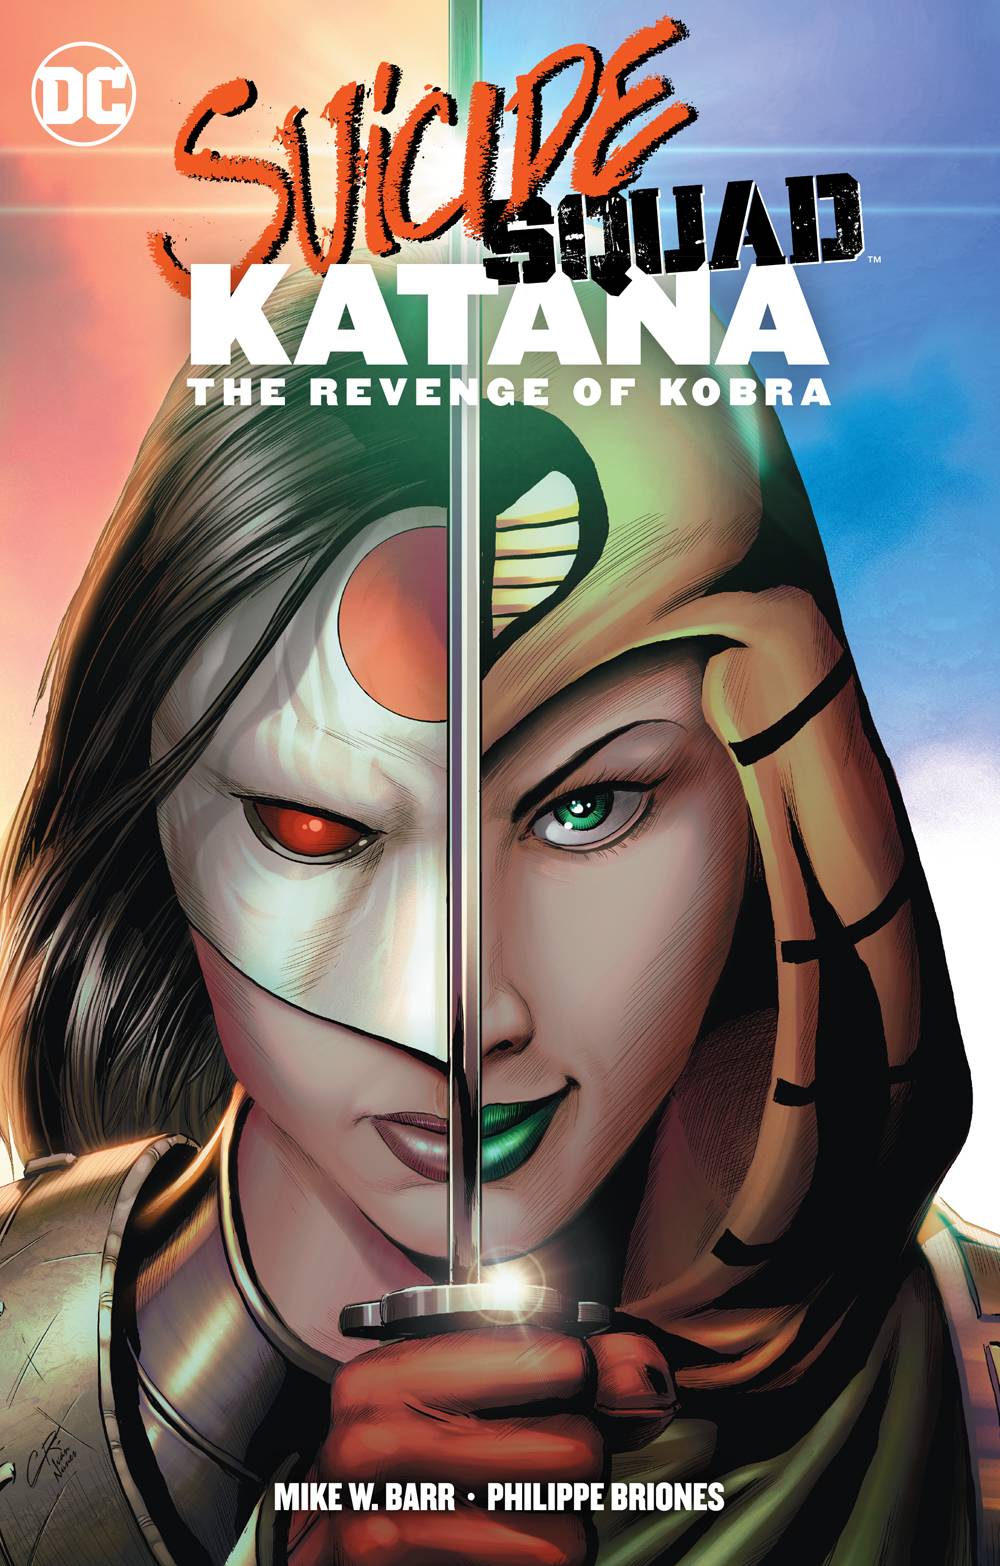 Suicide Squad Katana The Revenge of Cobra Graphic Novel